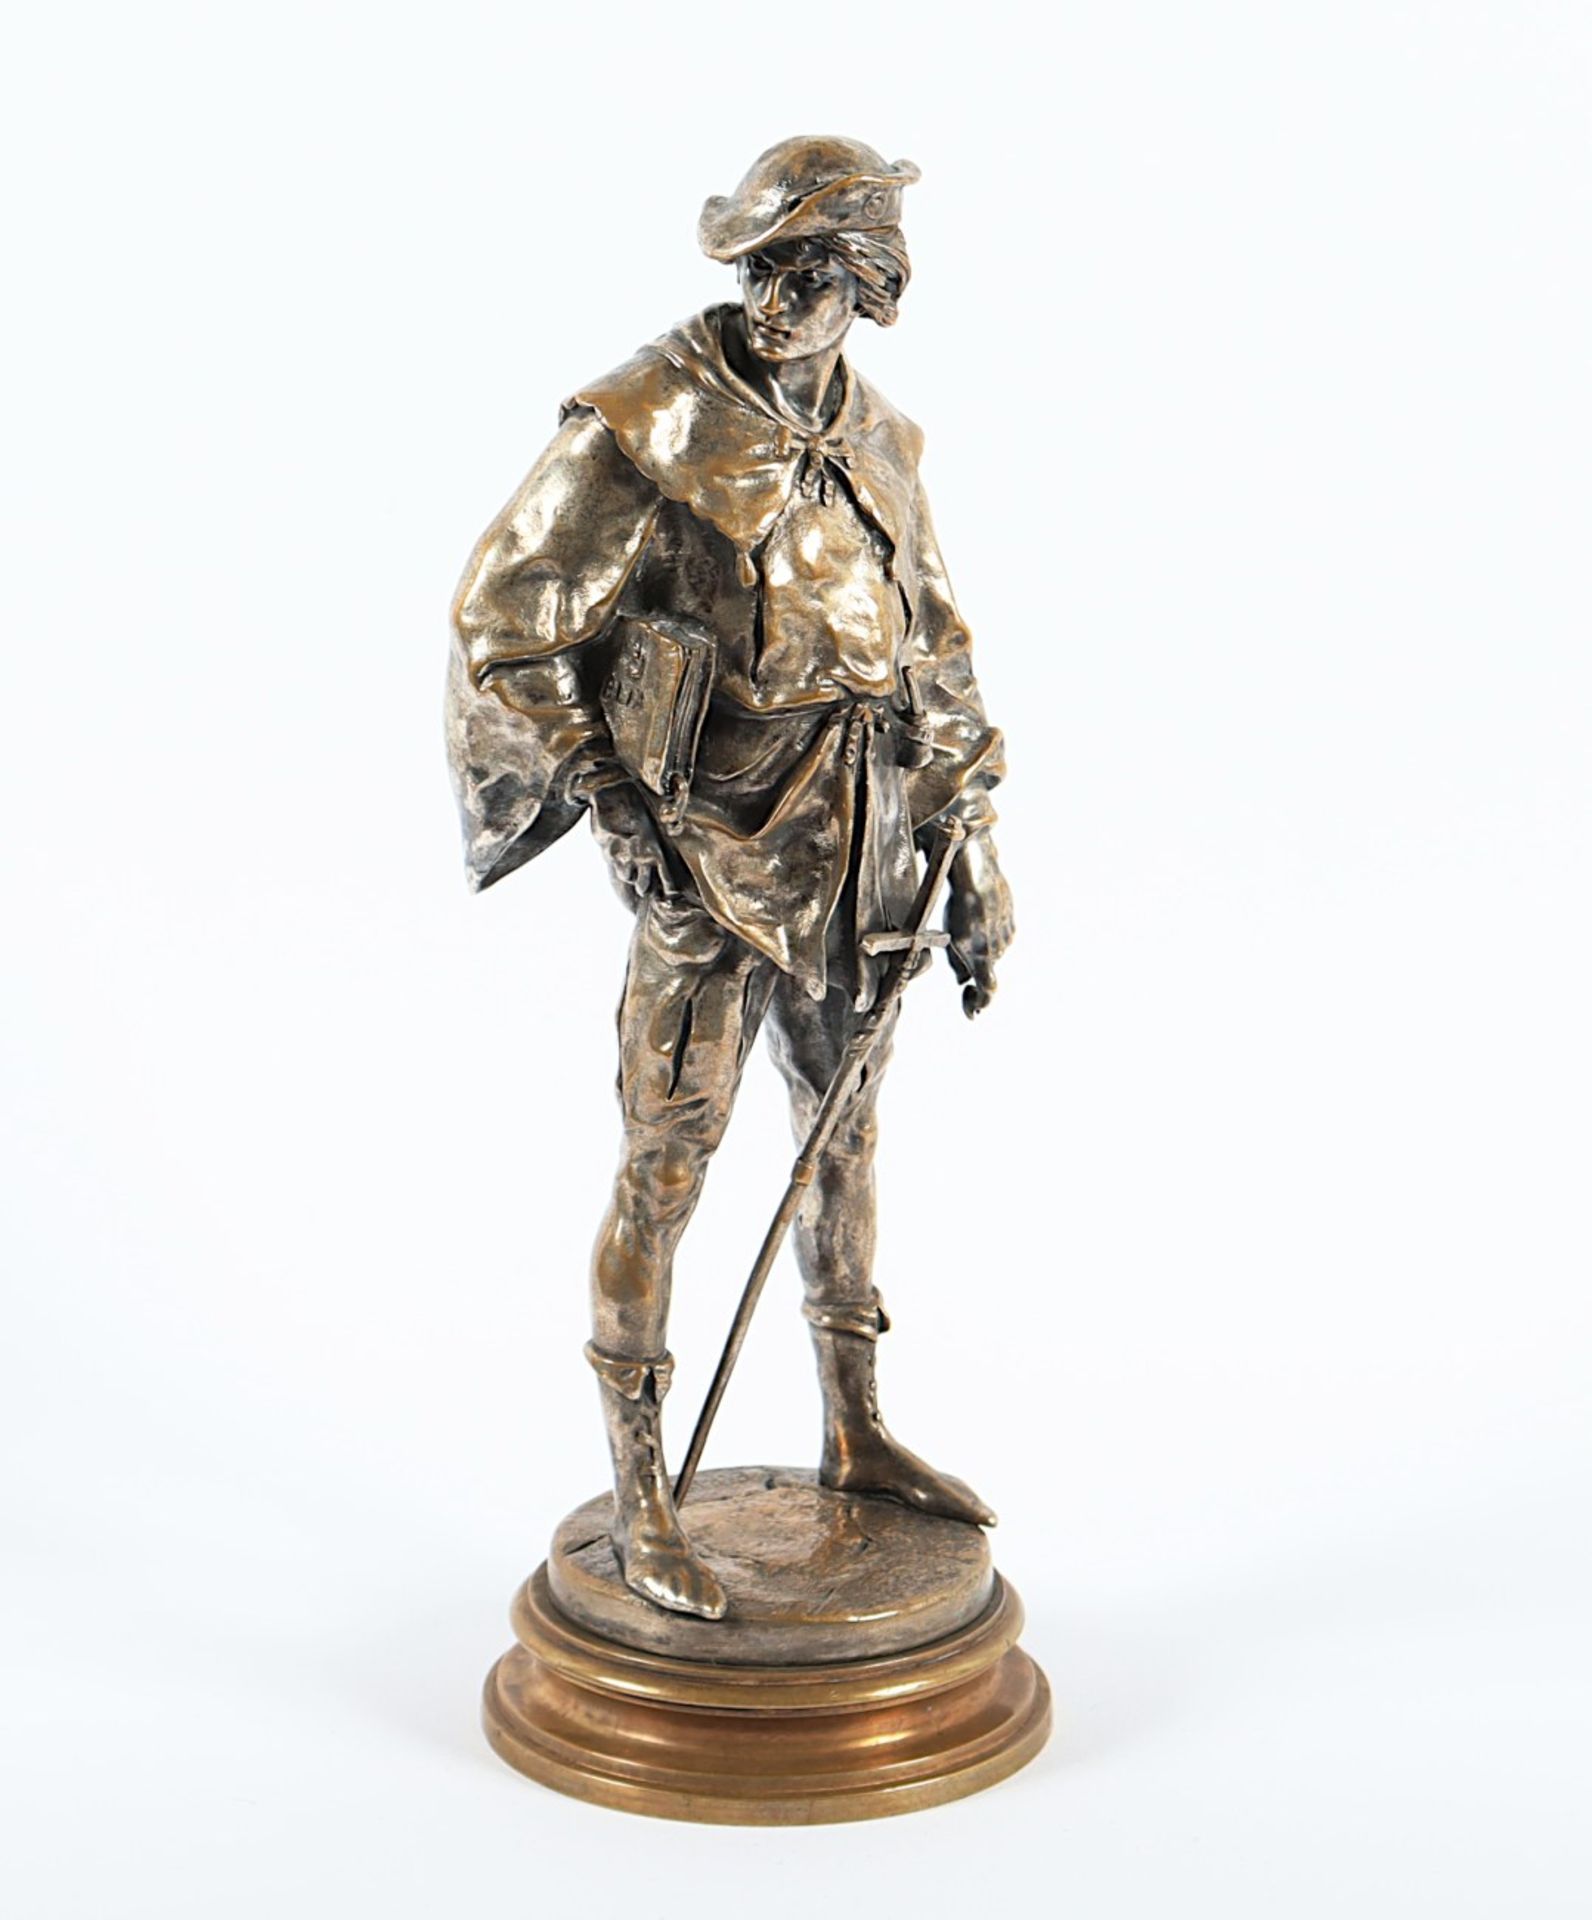 PICAULT, Emile Louis (1833-1915), "L'escholier", Bronze, H 25,5, auf dem Sockel signiert, Gießermar